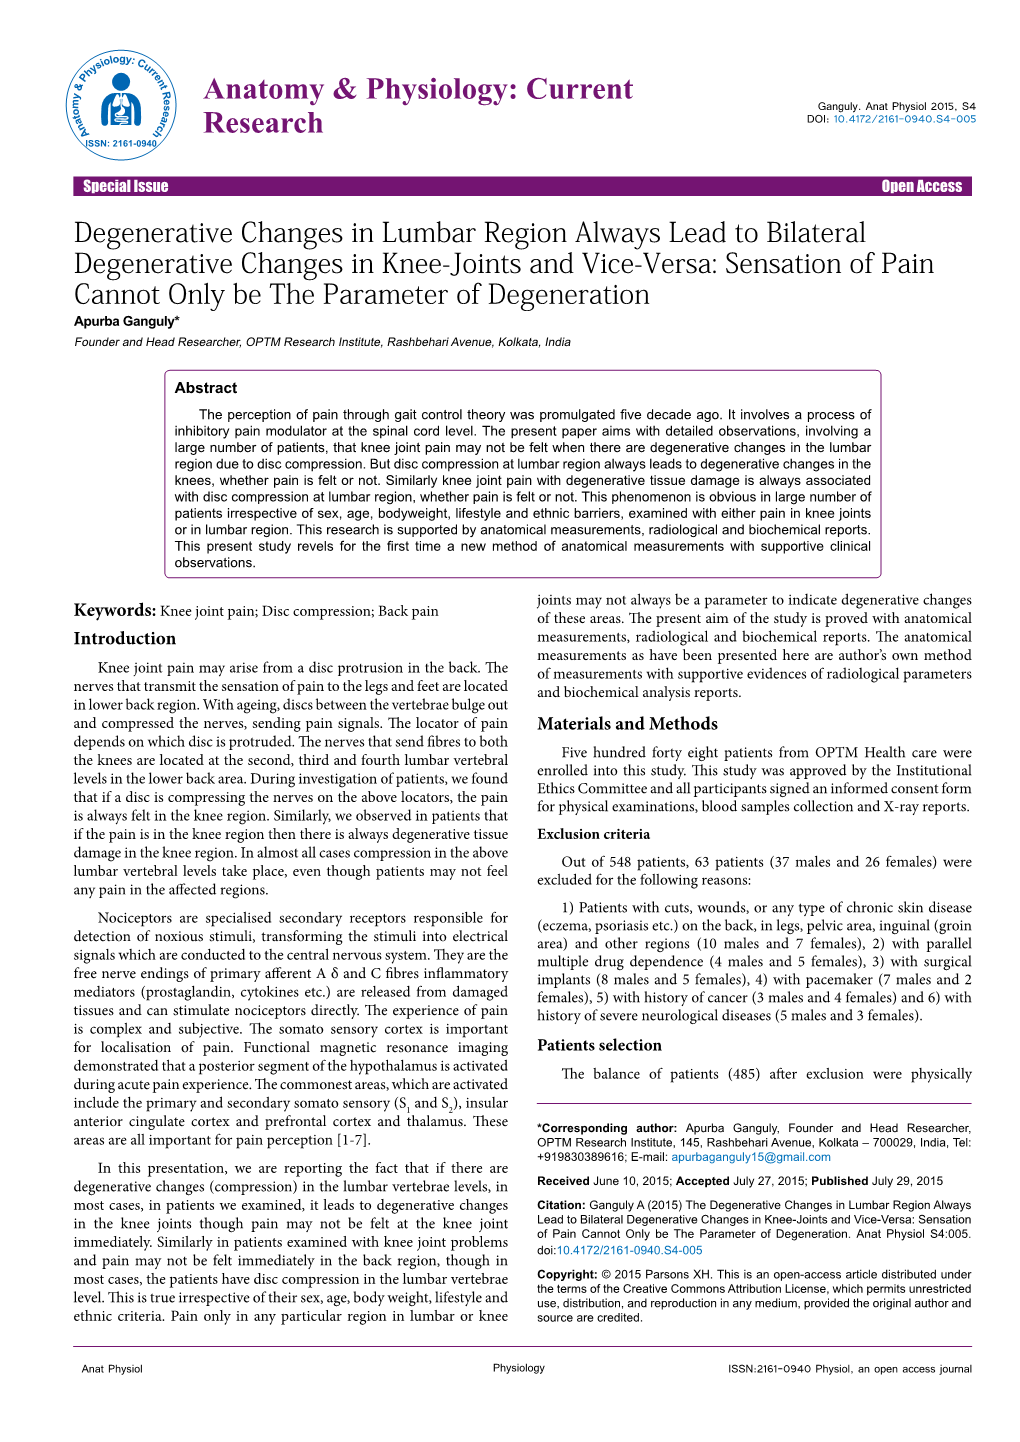 Degenerative Changes in Lumbar Region Always Lead to Bilateral Degenerative Changes in Knee-Joints and Vice-Versa: Sensation Of